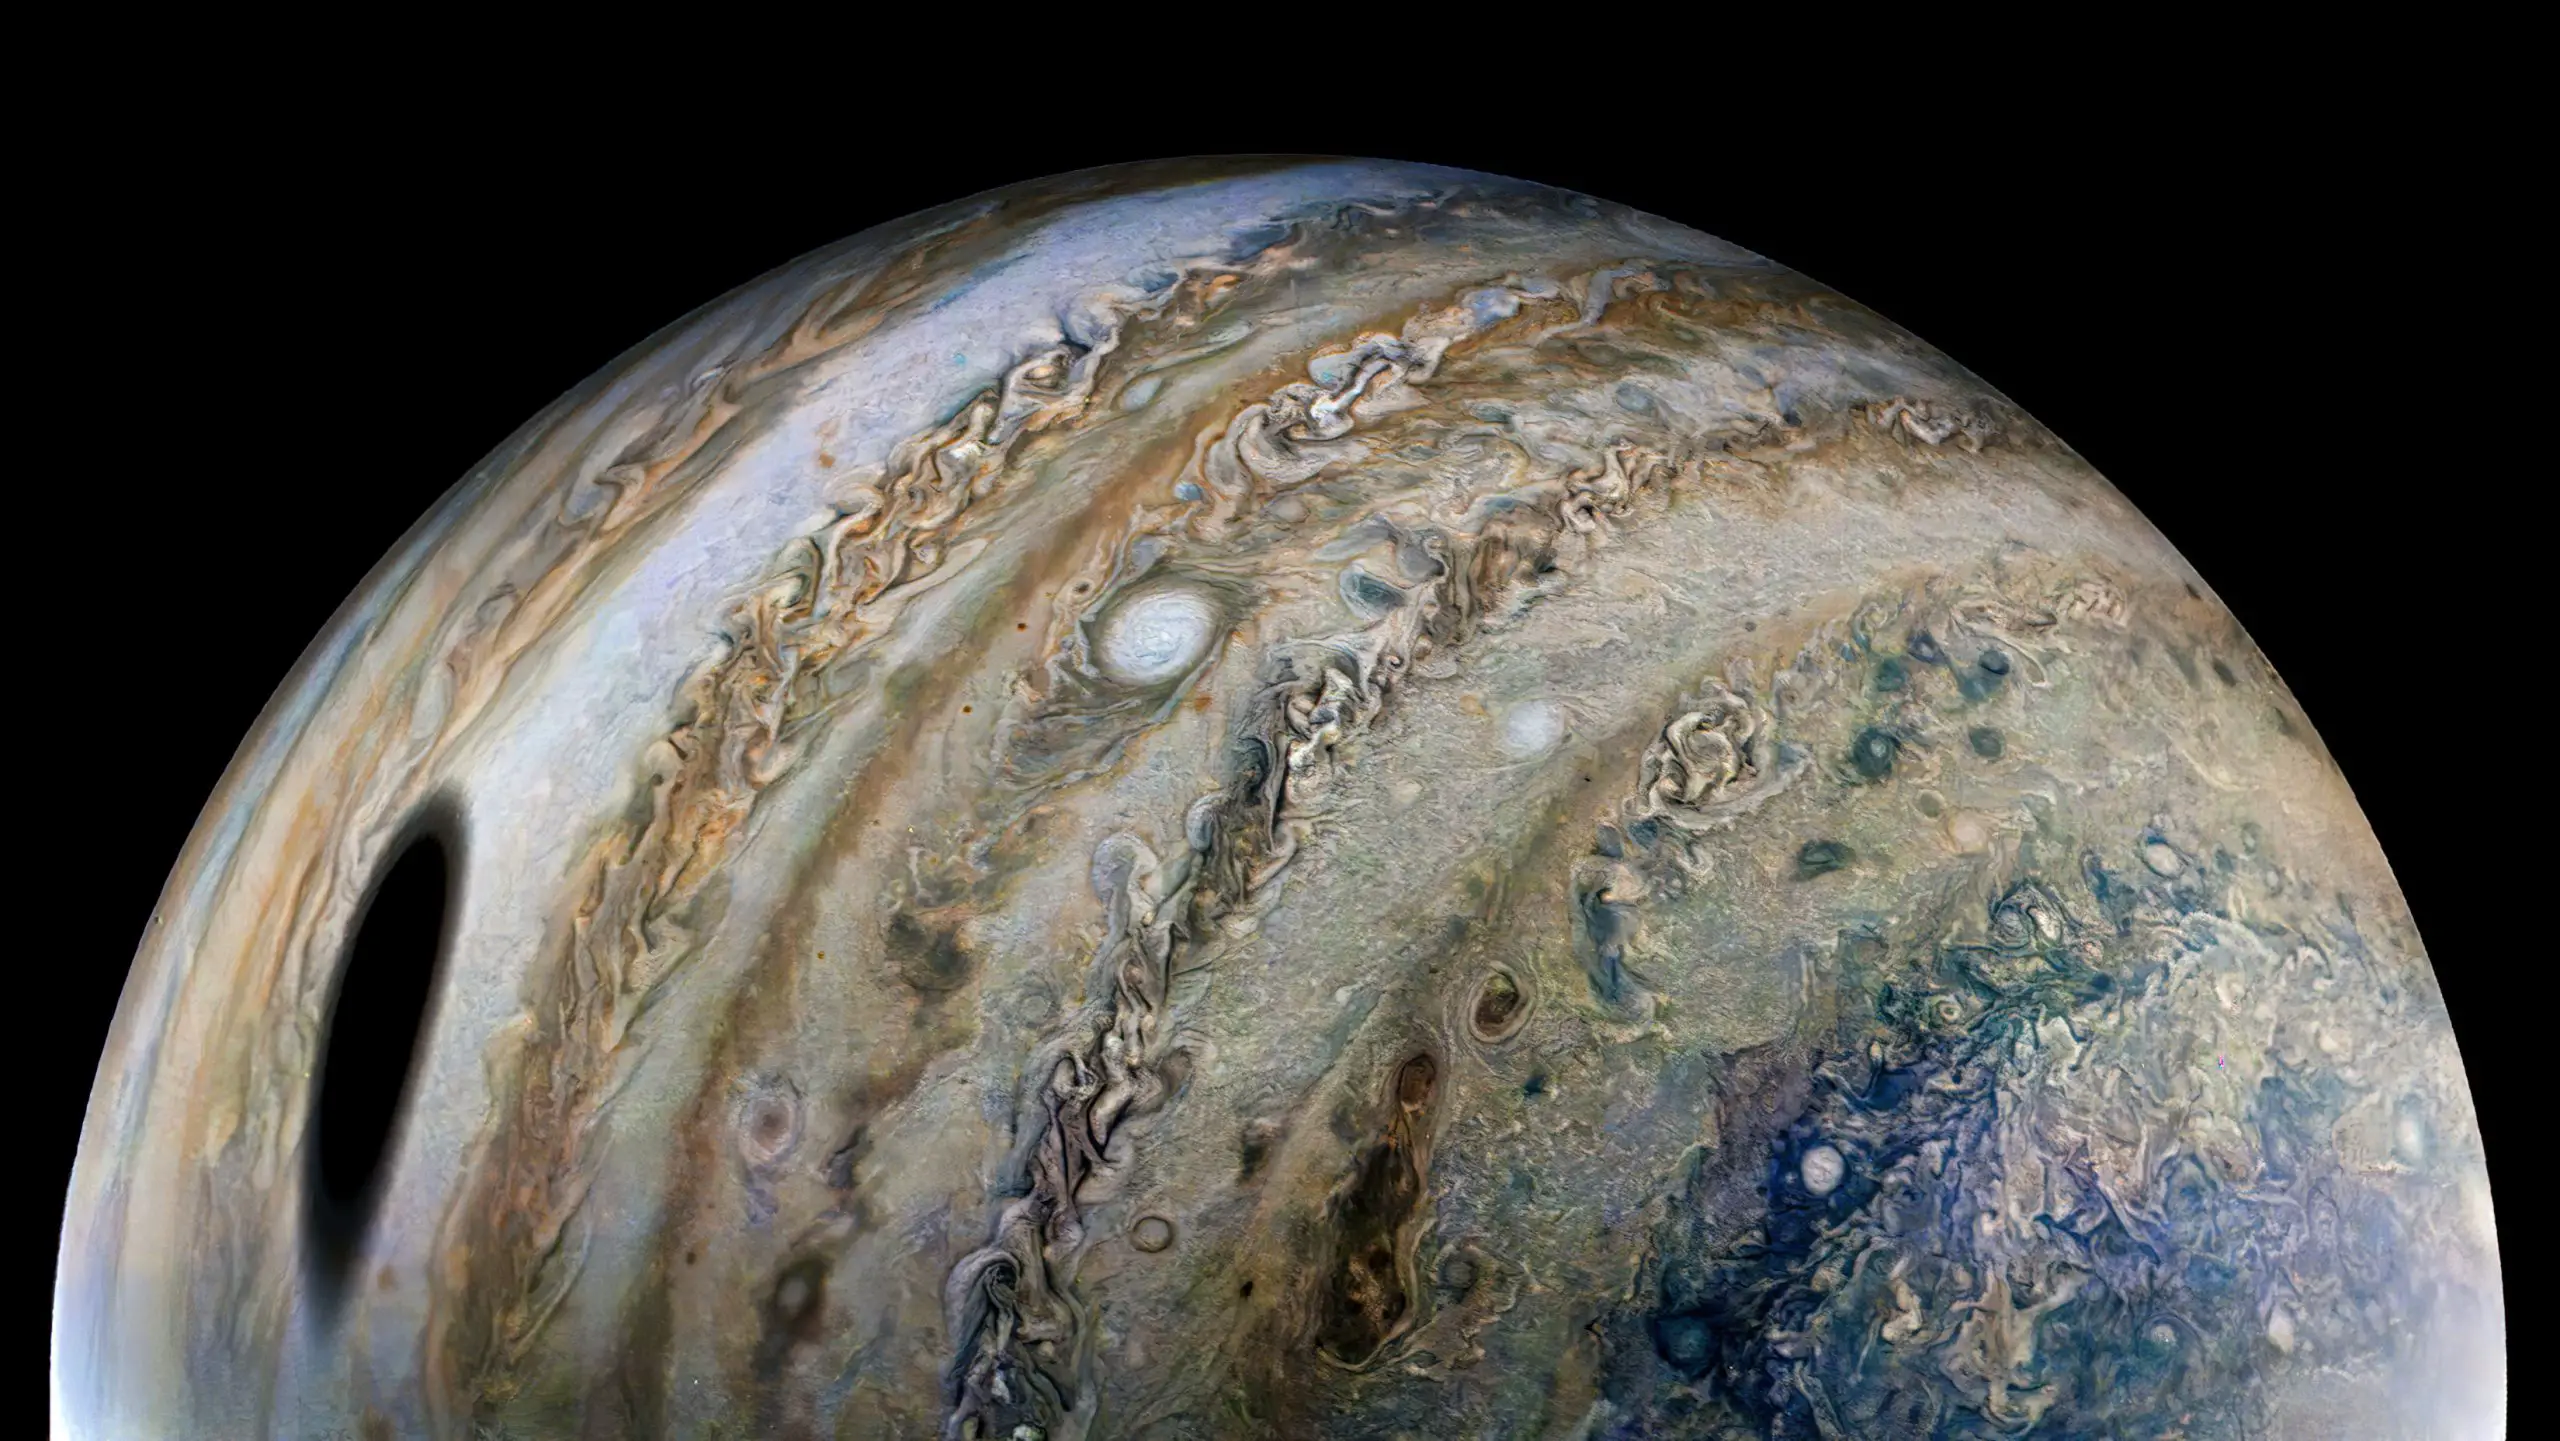 Jupiter's largest moon Ganymede casts a large shadow